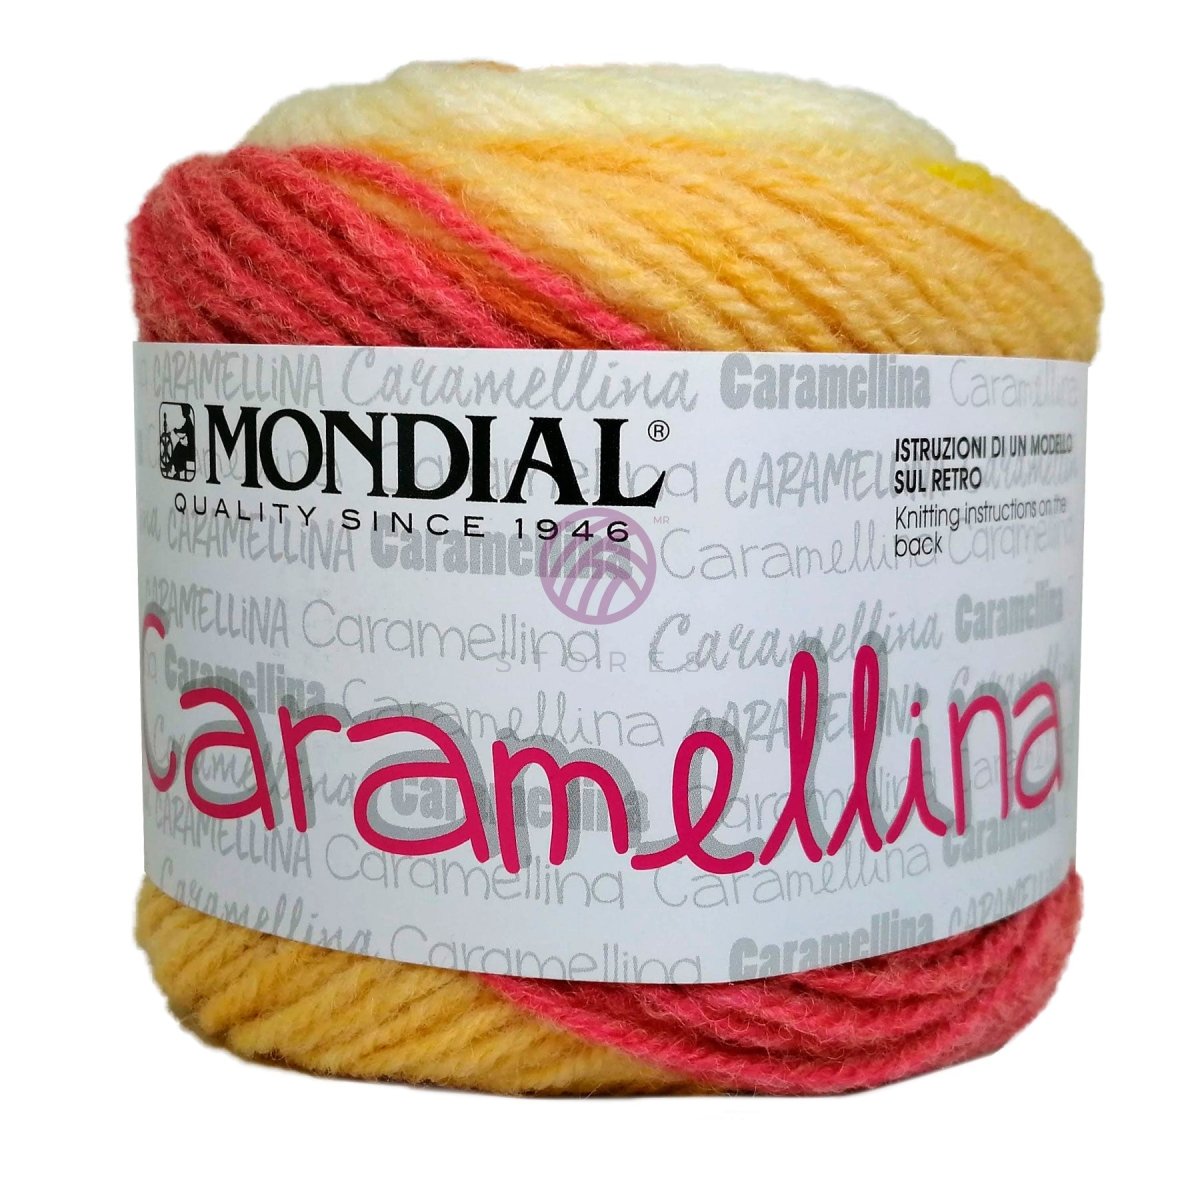 CARAMELLINA - Crochetstores12519108020586352821